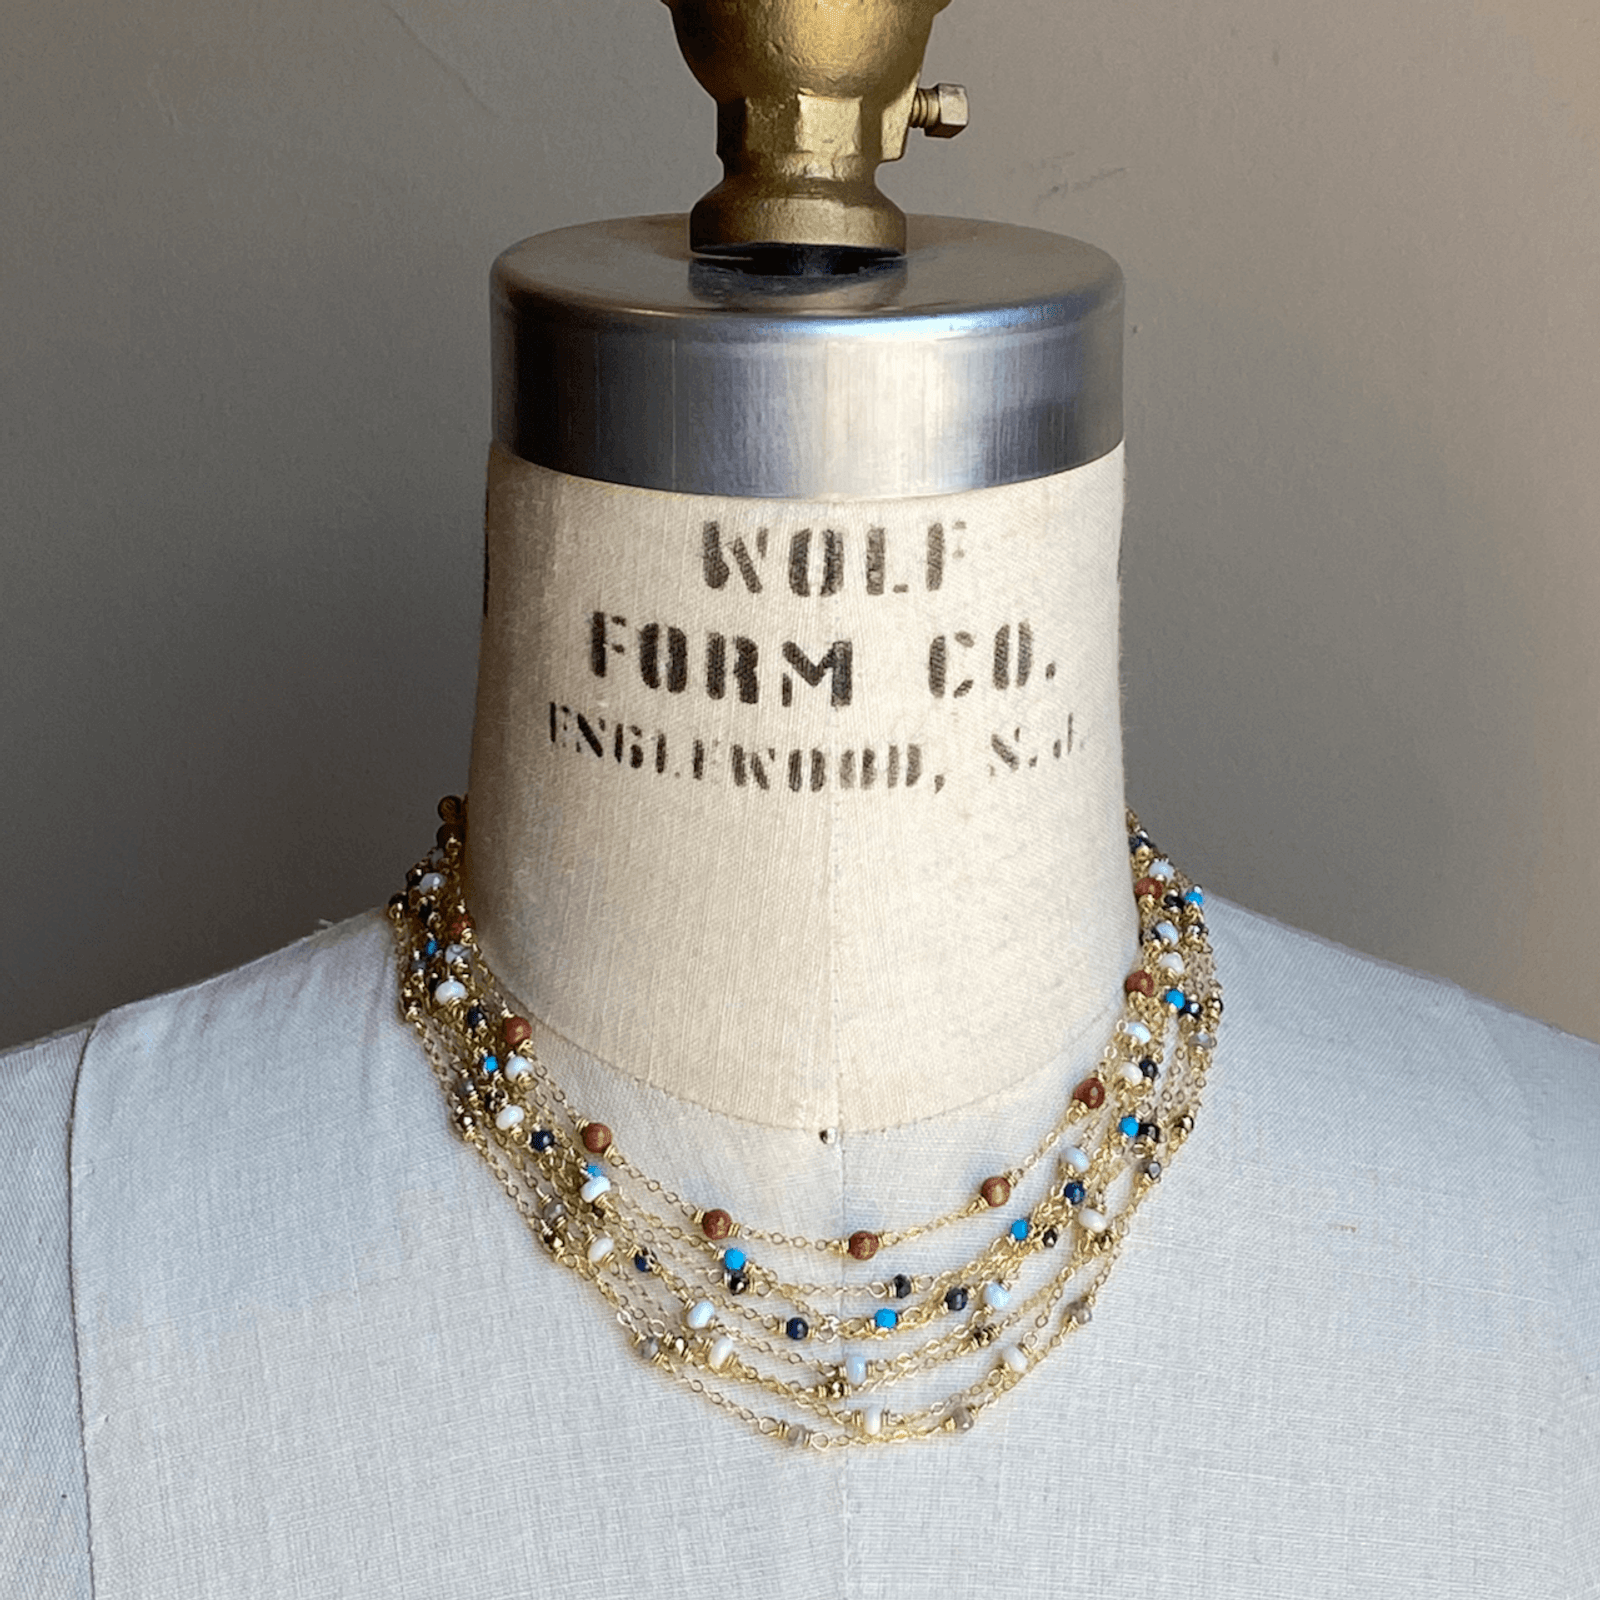 Handmade Jewelry Gold Necklace Extenders Liz James Designs